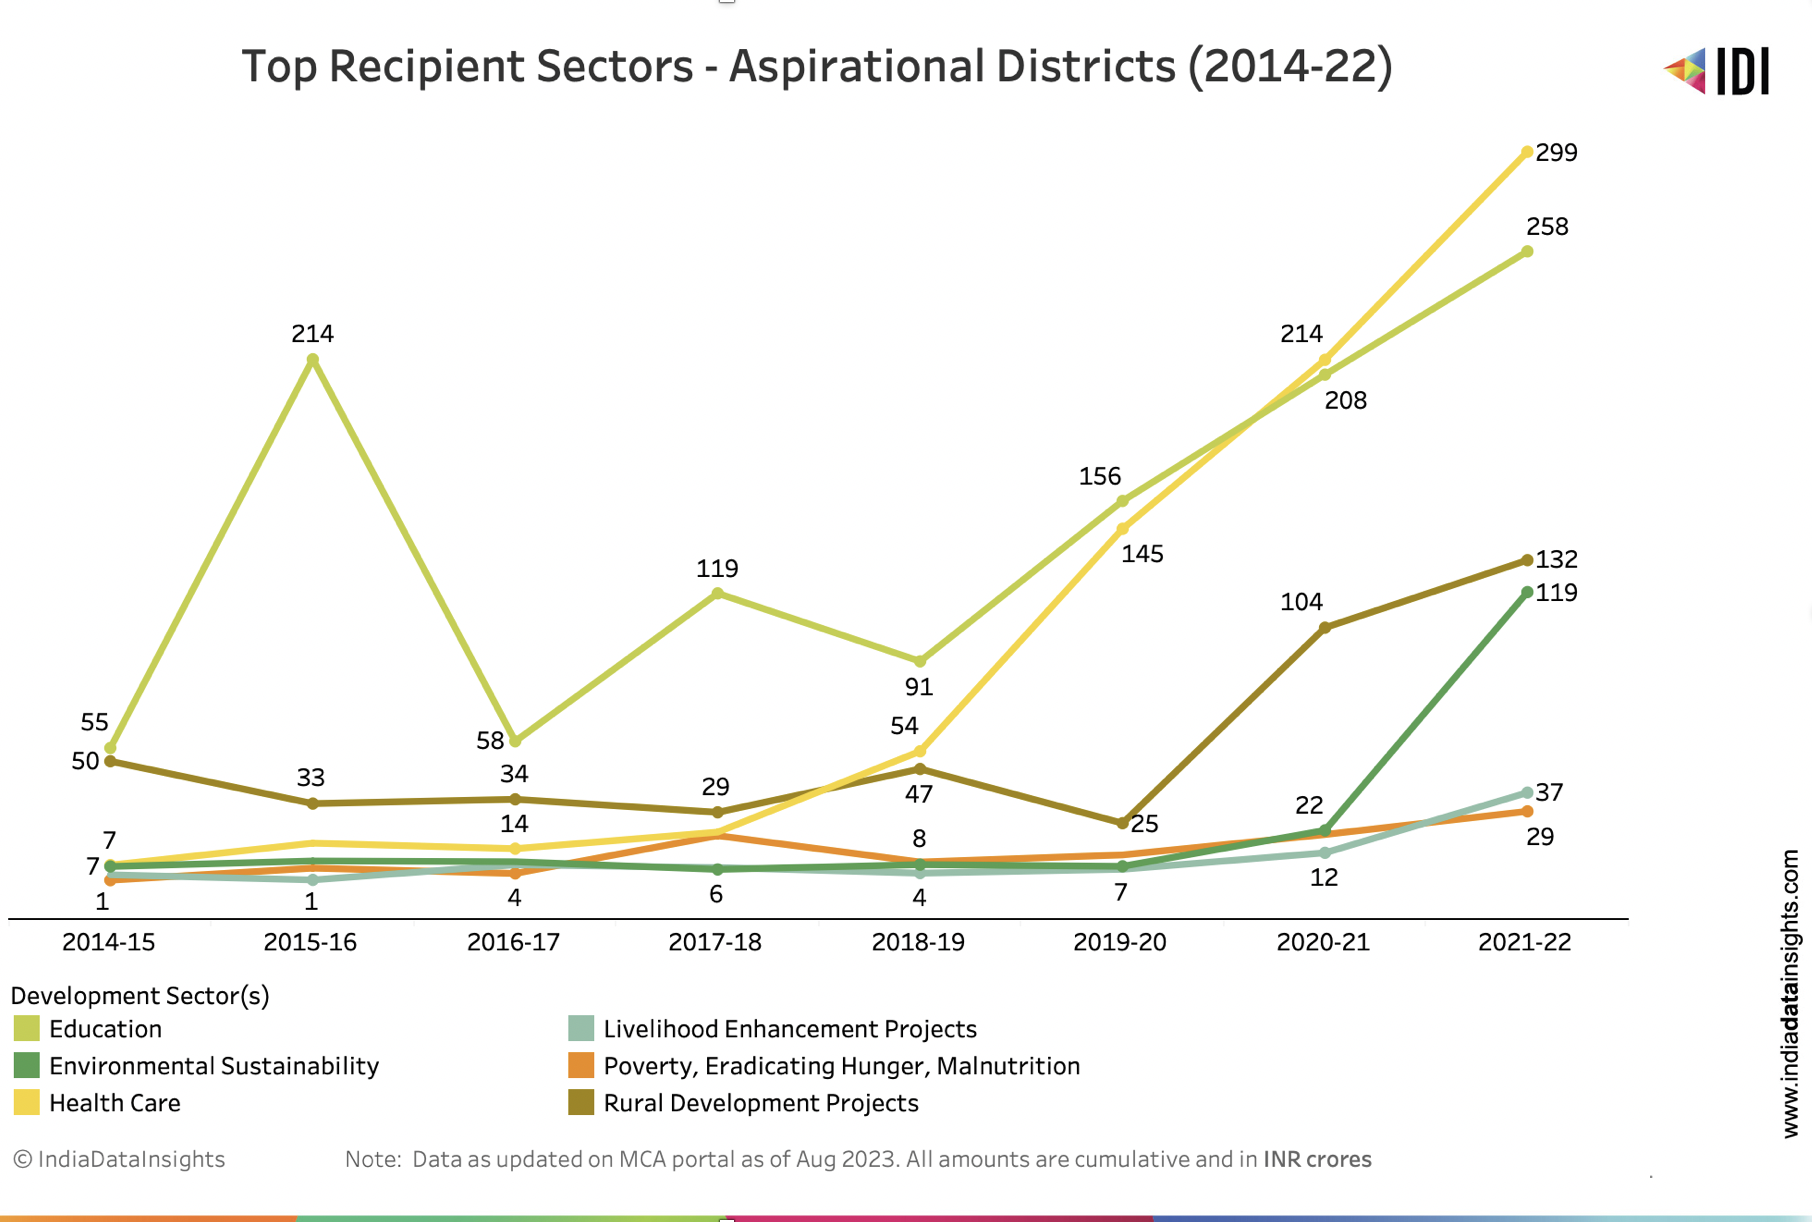 Top recipient sectors receiving CSR funds